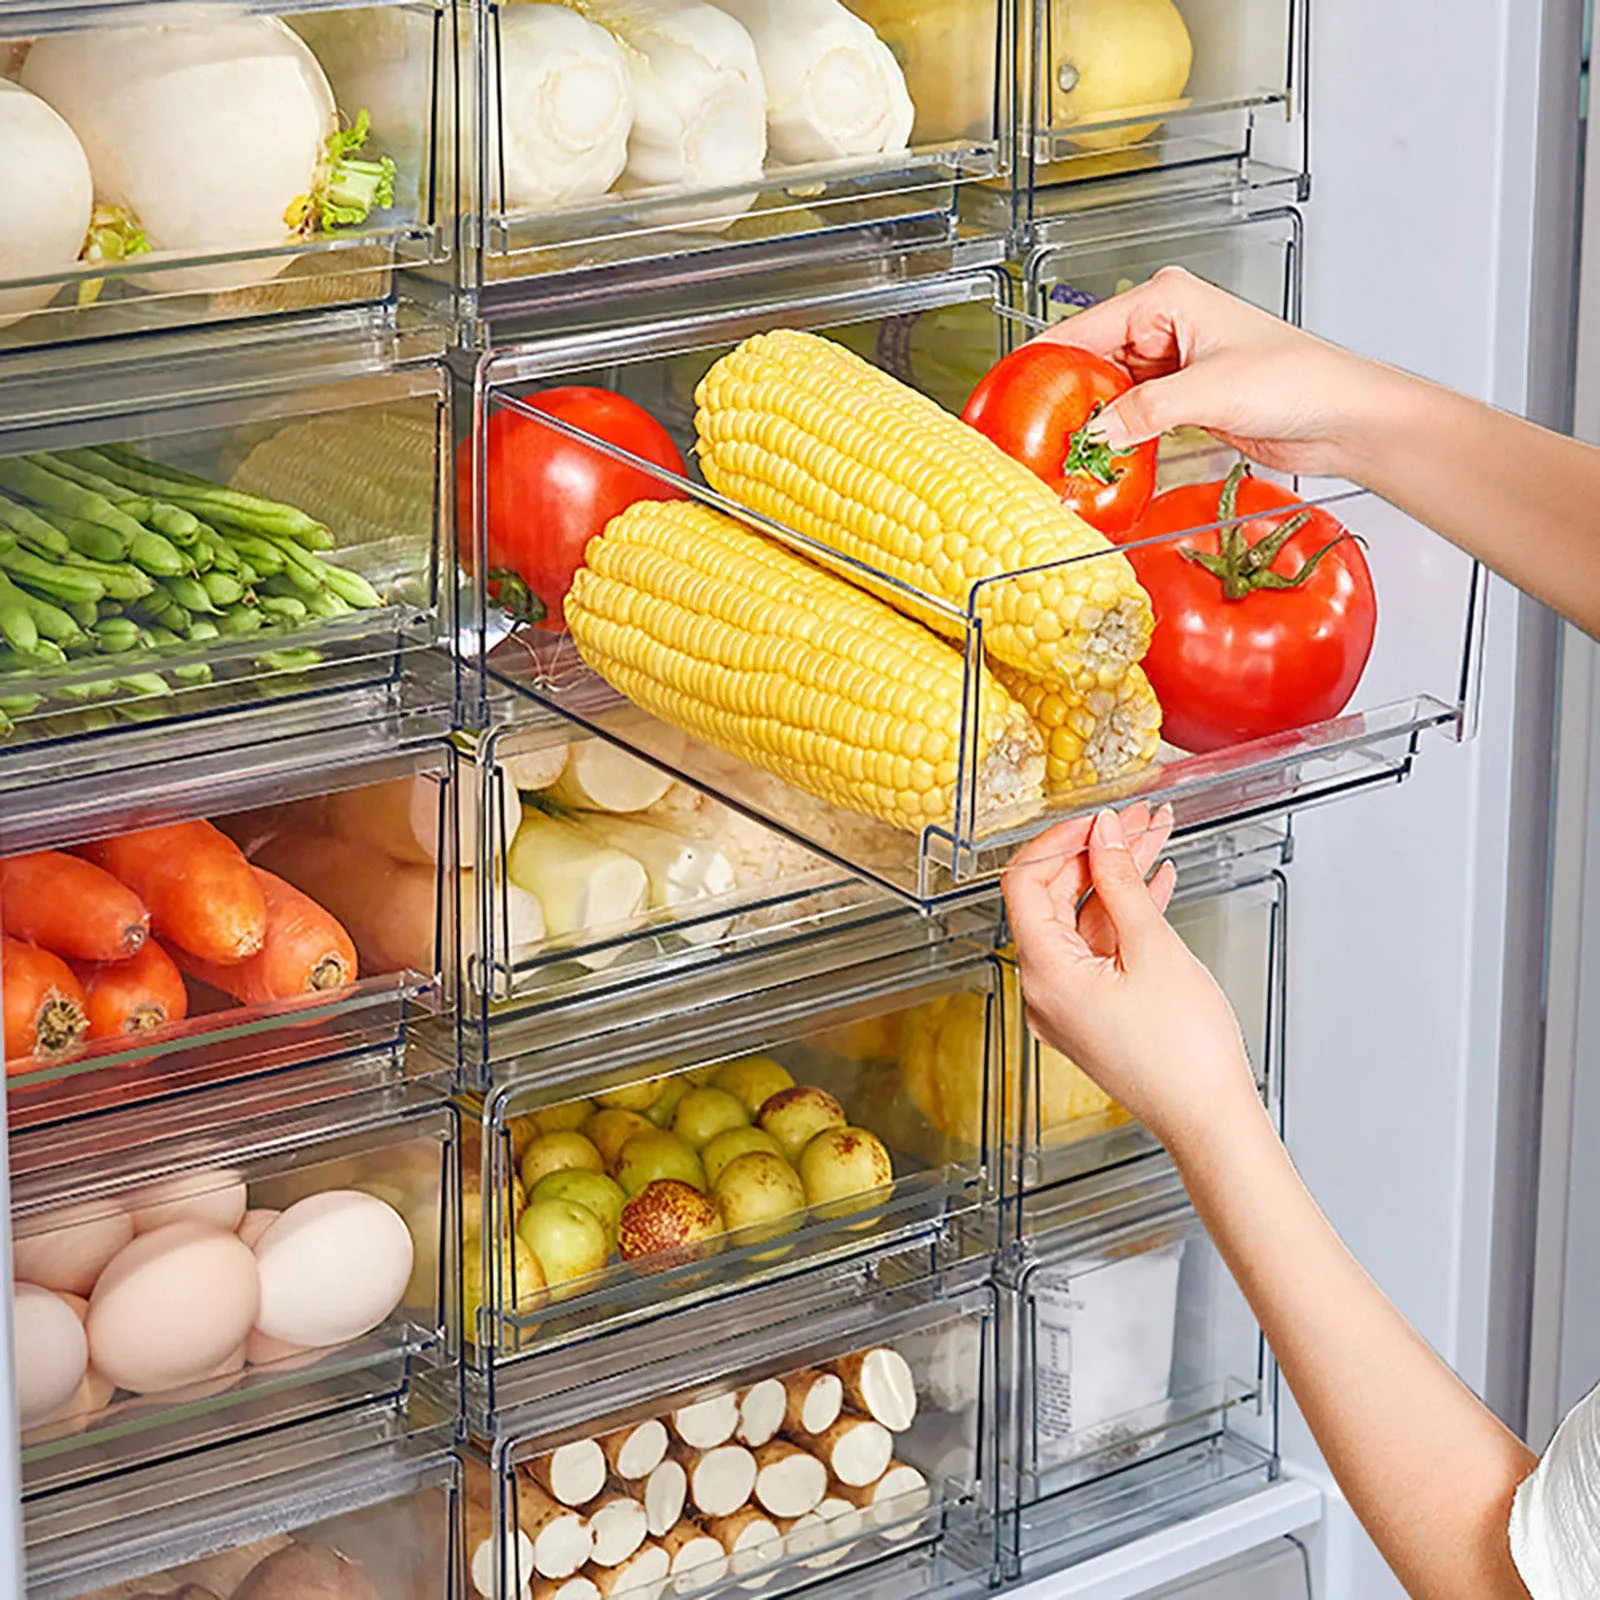 https://ae01.alicdn.com/kf/S9f5ecc0b31604639b4bfae0925a054adO/Stackable-Drawer-Food-Storage-Box-Conrainer-Refrigerator-Fruit-Cheese-Vegetable-Organizer-Bins-Large-Capacity-Juice-Egg.jpg